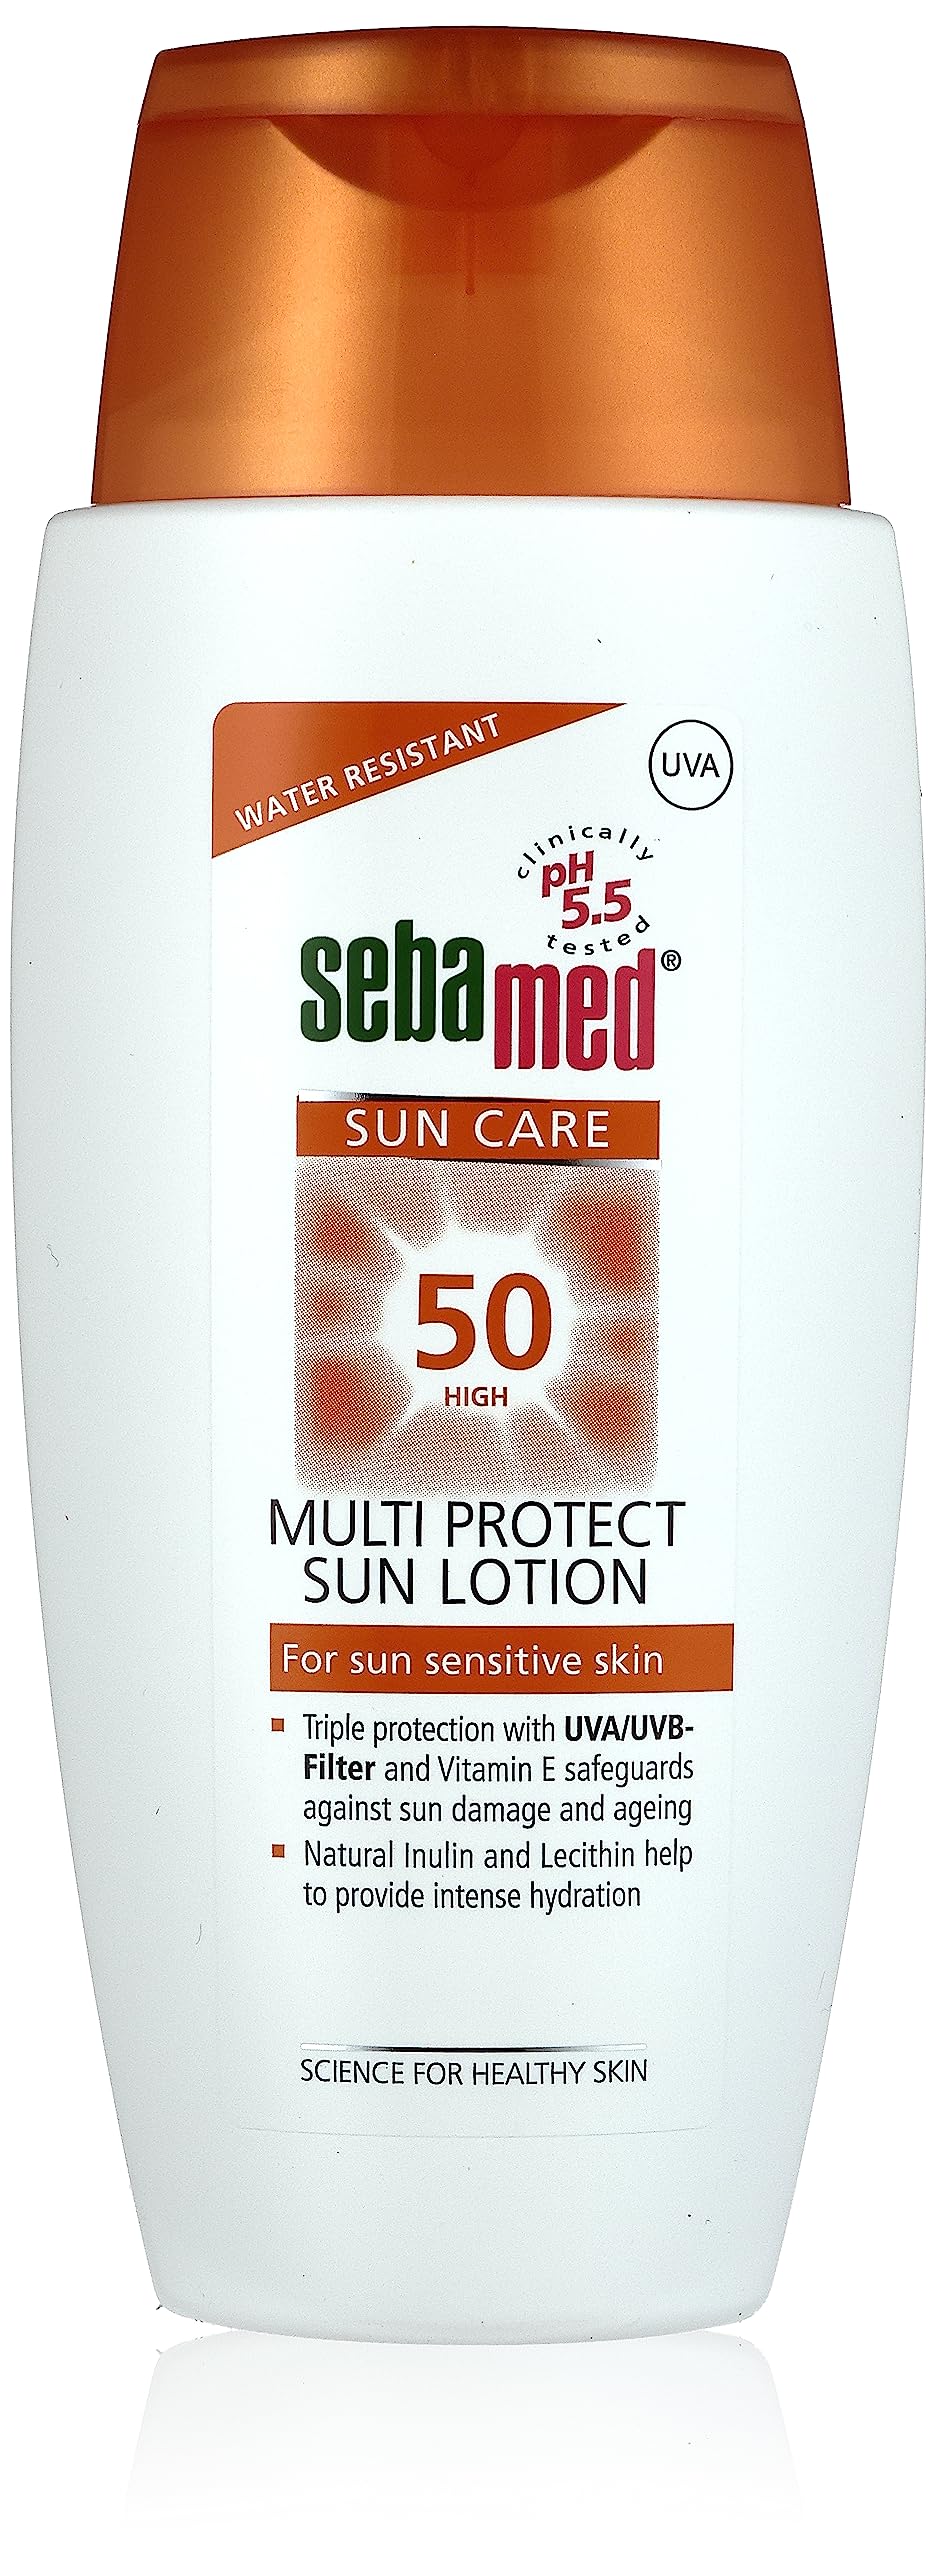 SEBAMED SUN CARE MULTI PROTECT SUN LOTION SPF50 150ML